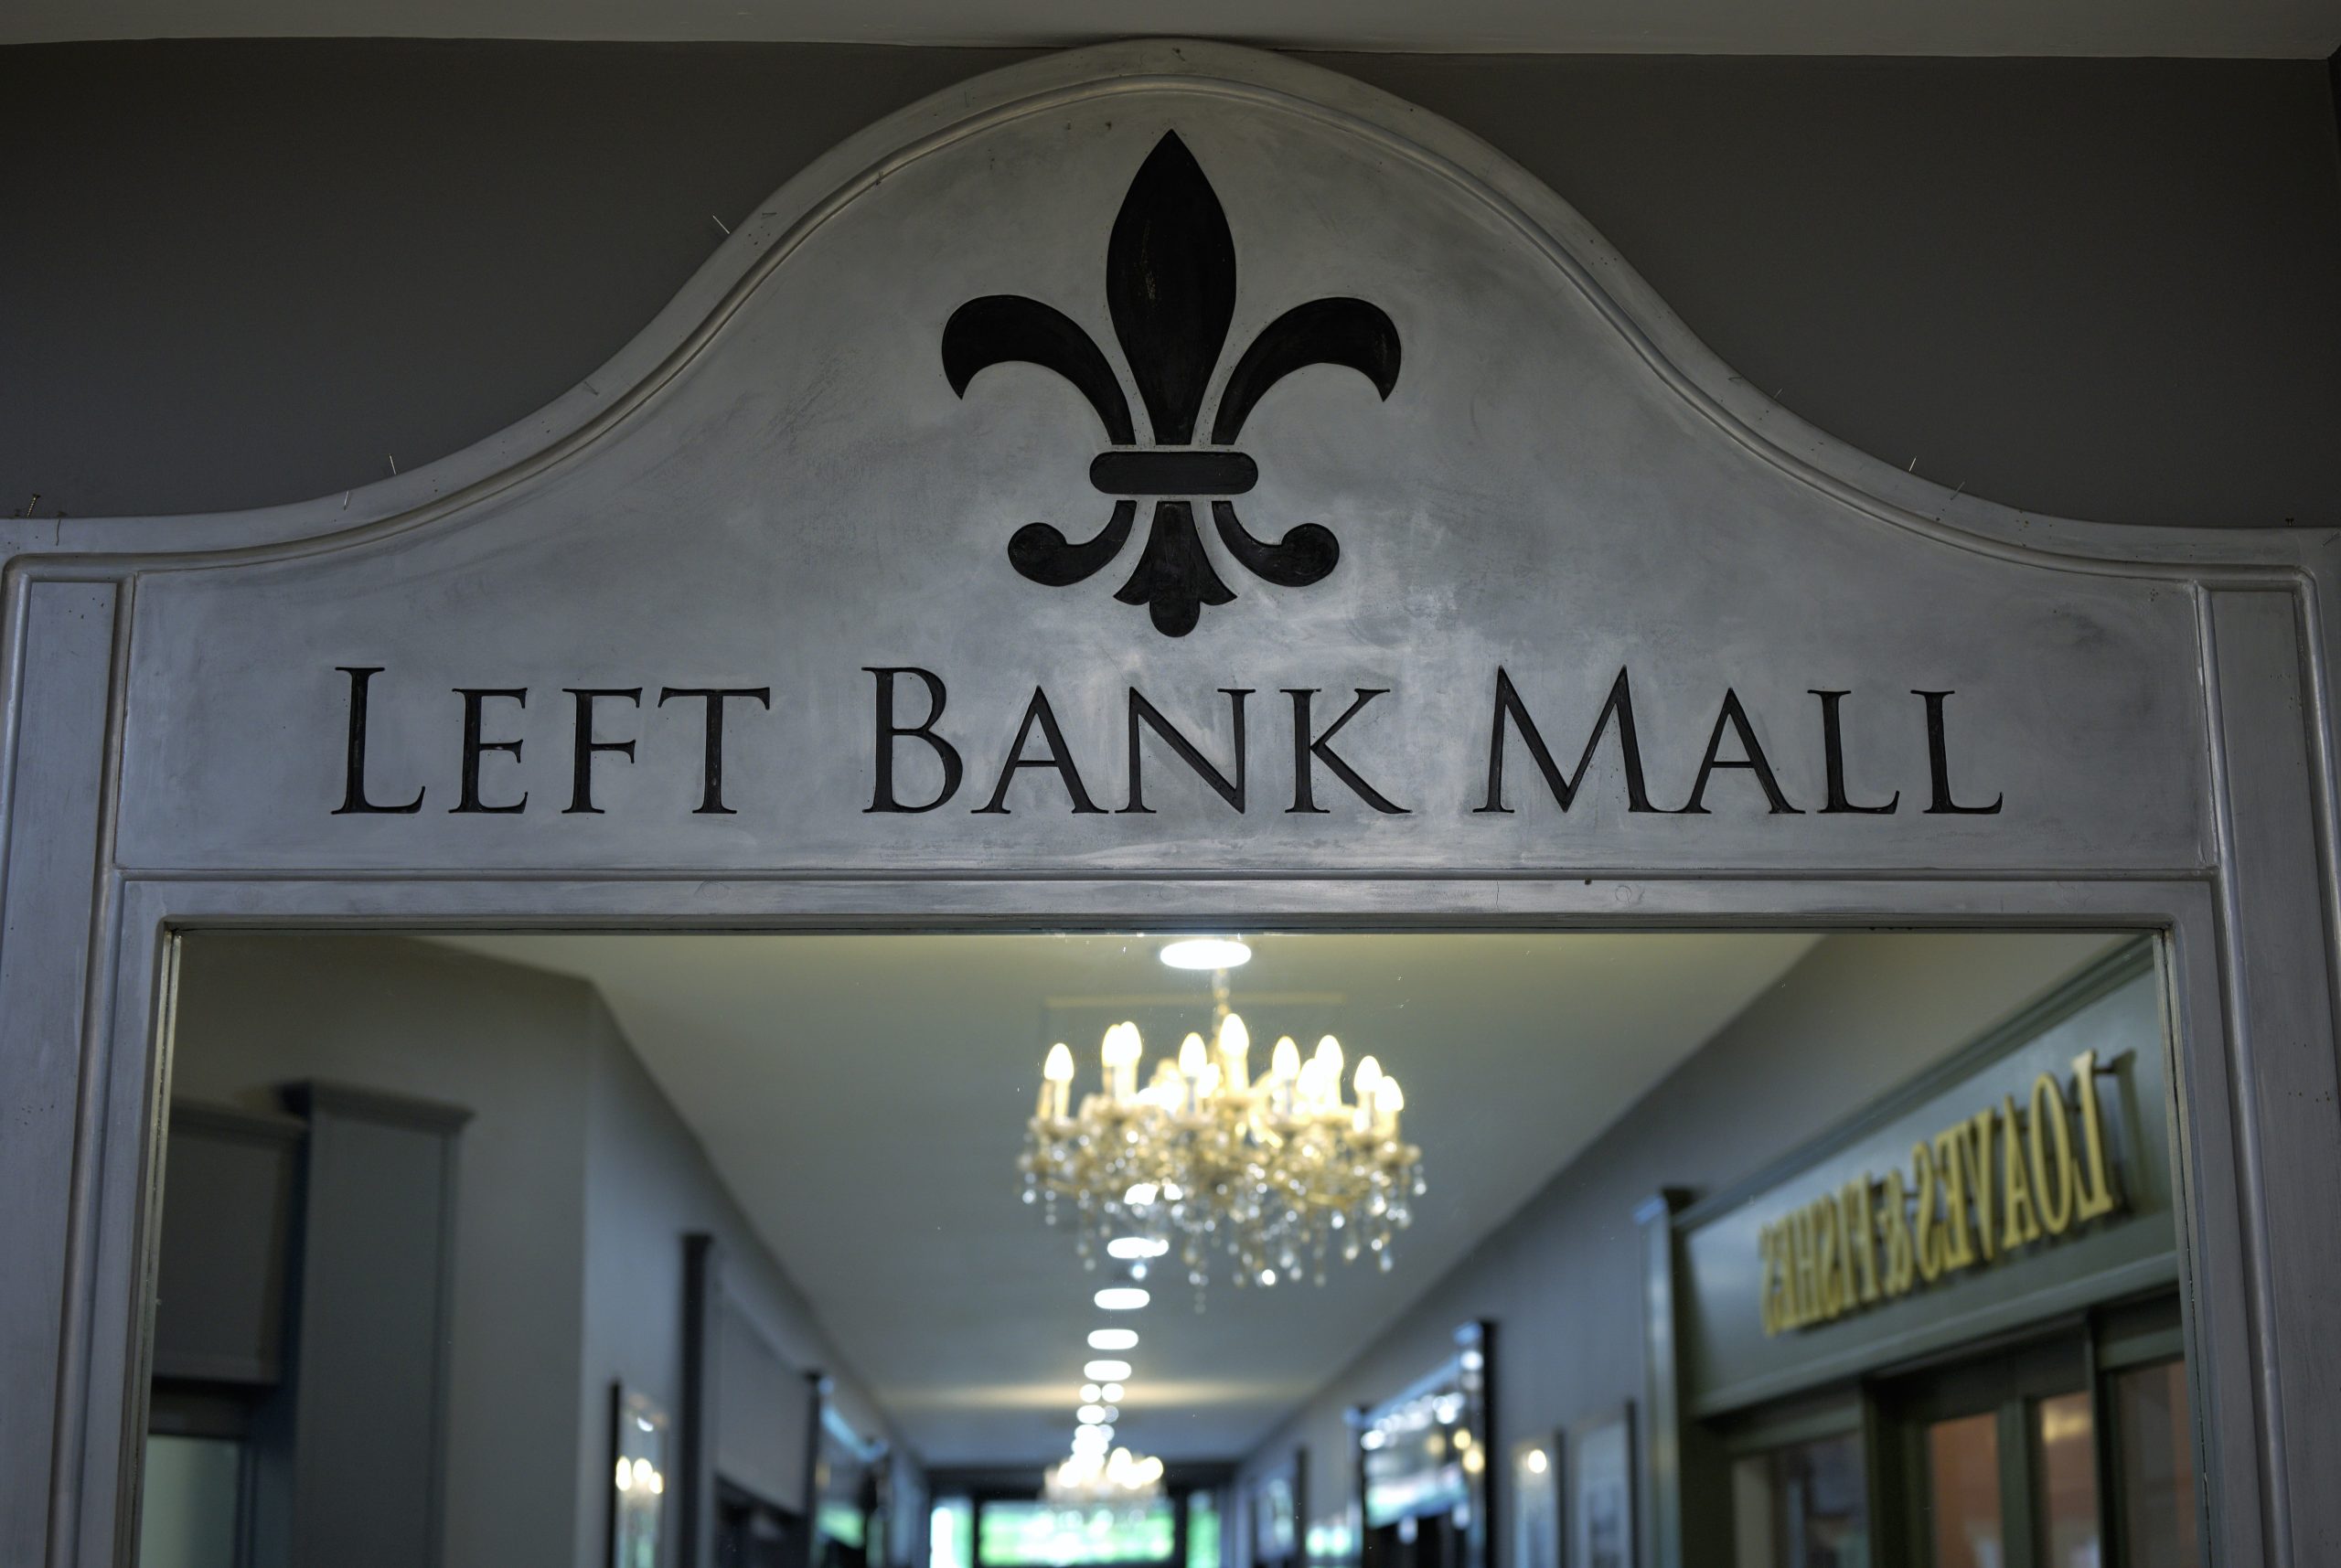 Left Bank Mall